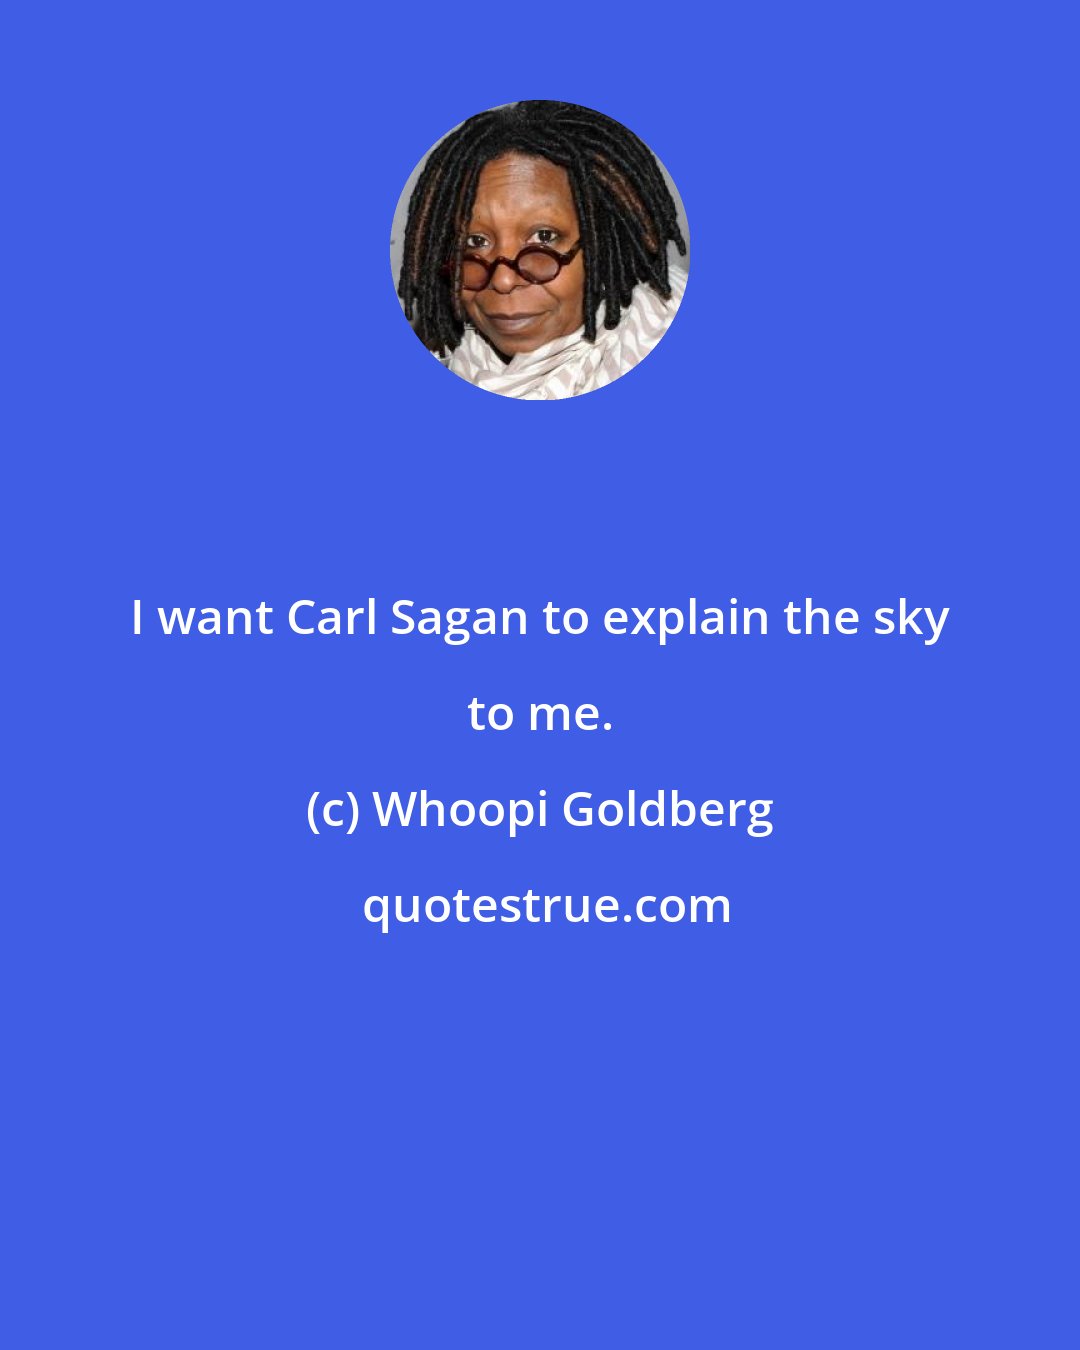 Whoopi Goldberg: I want Carl Sagan to explain the sky to me.